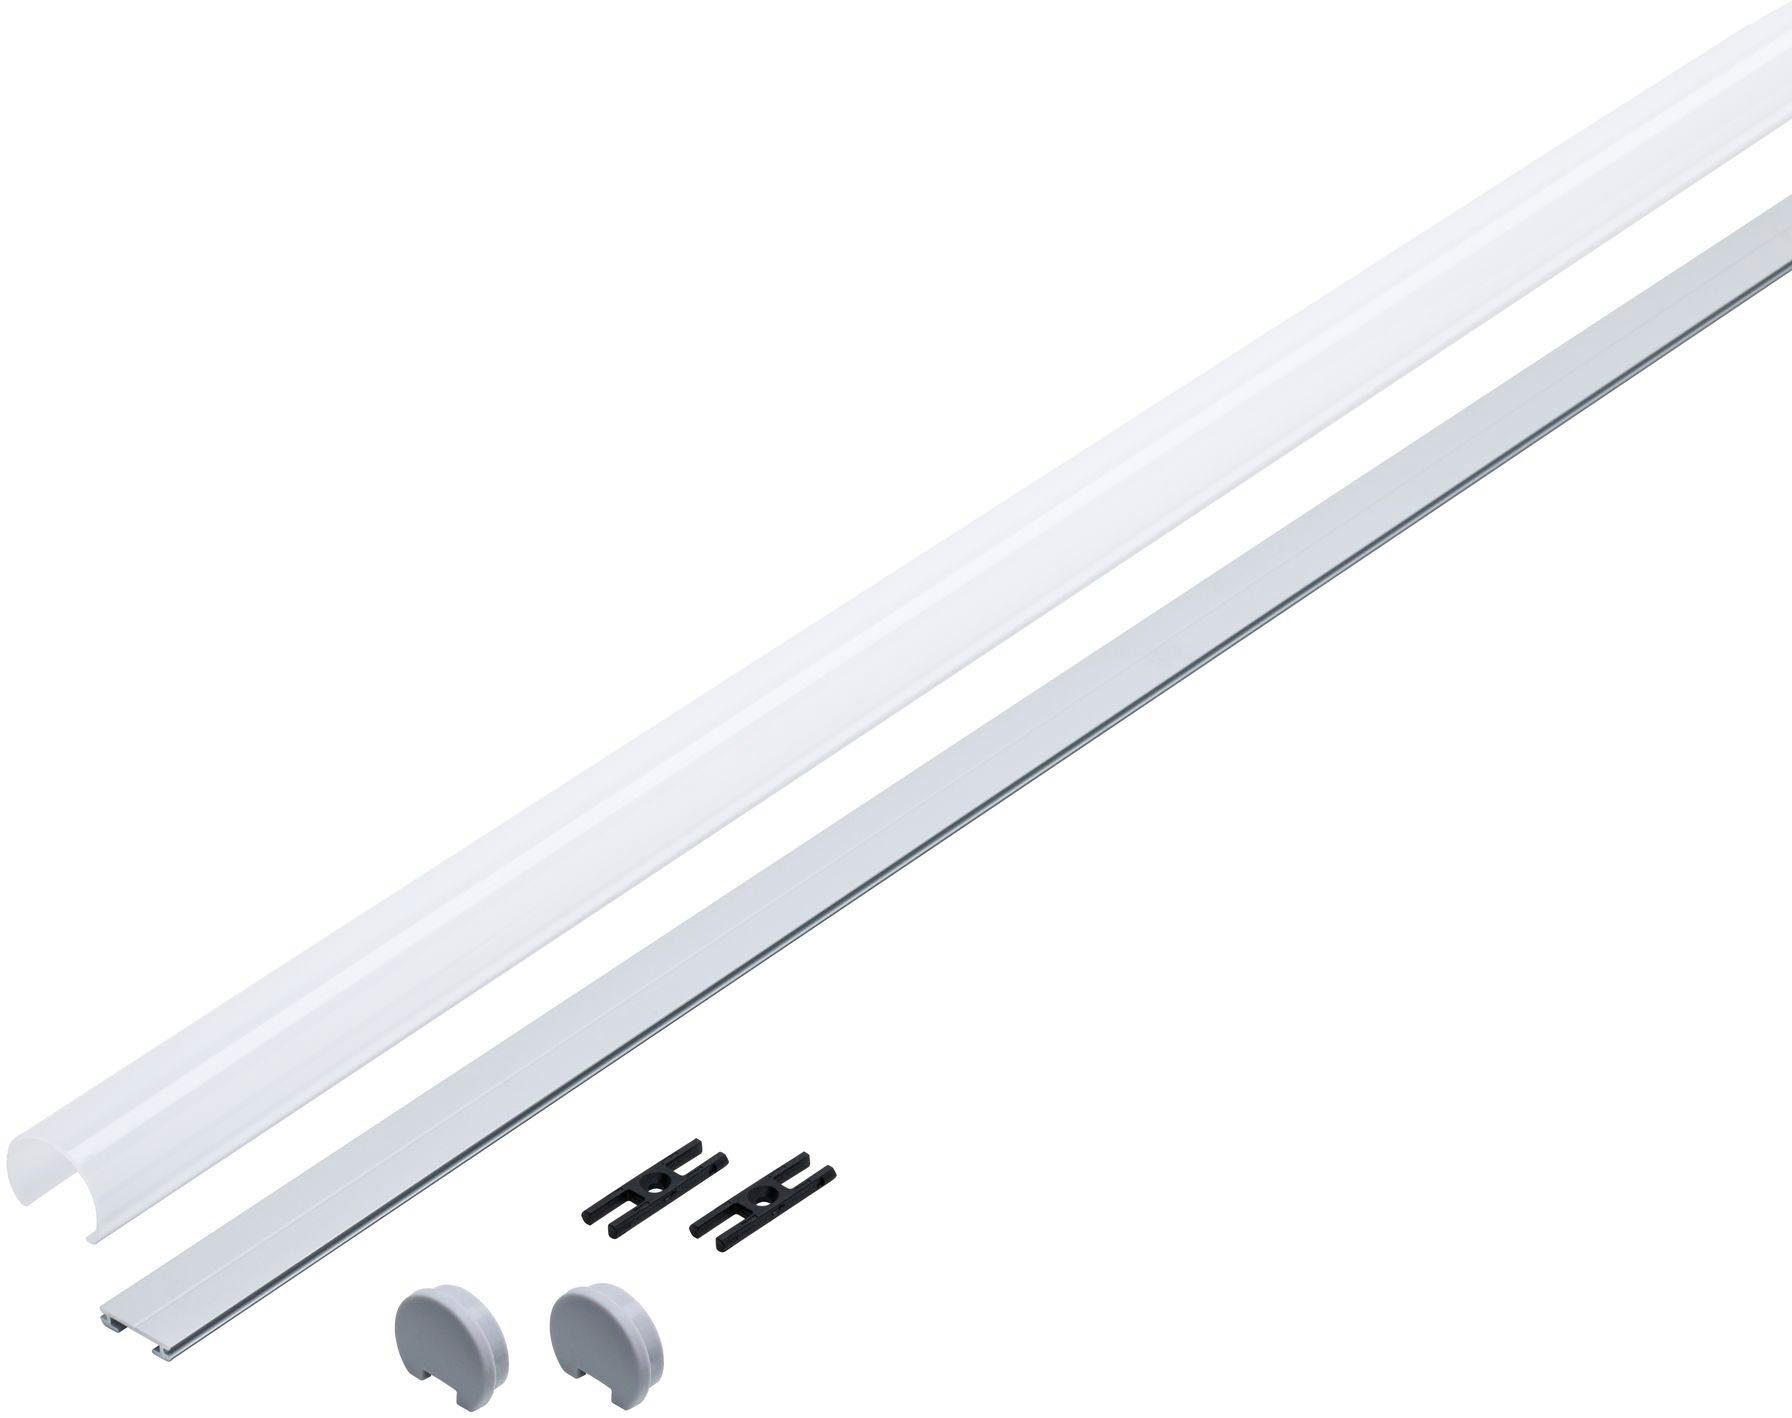 Paulmann LED-Streifen Tube Set inkl. cm 100 Clips, Endkappen und Profil Diffusor